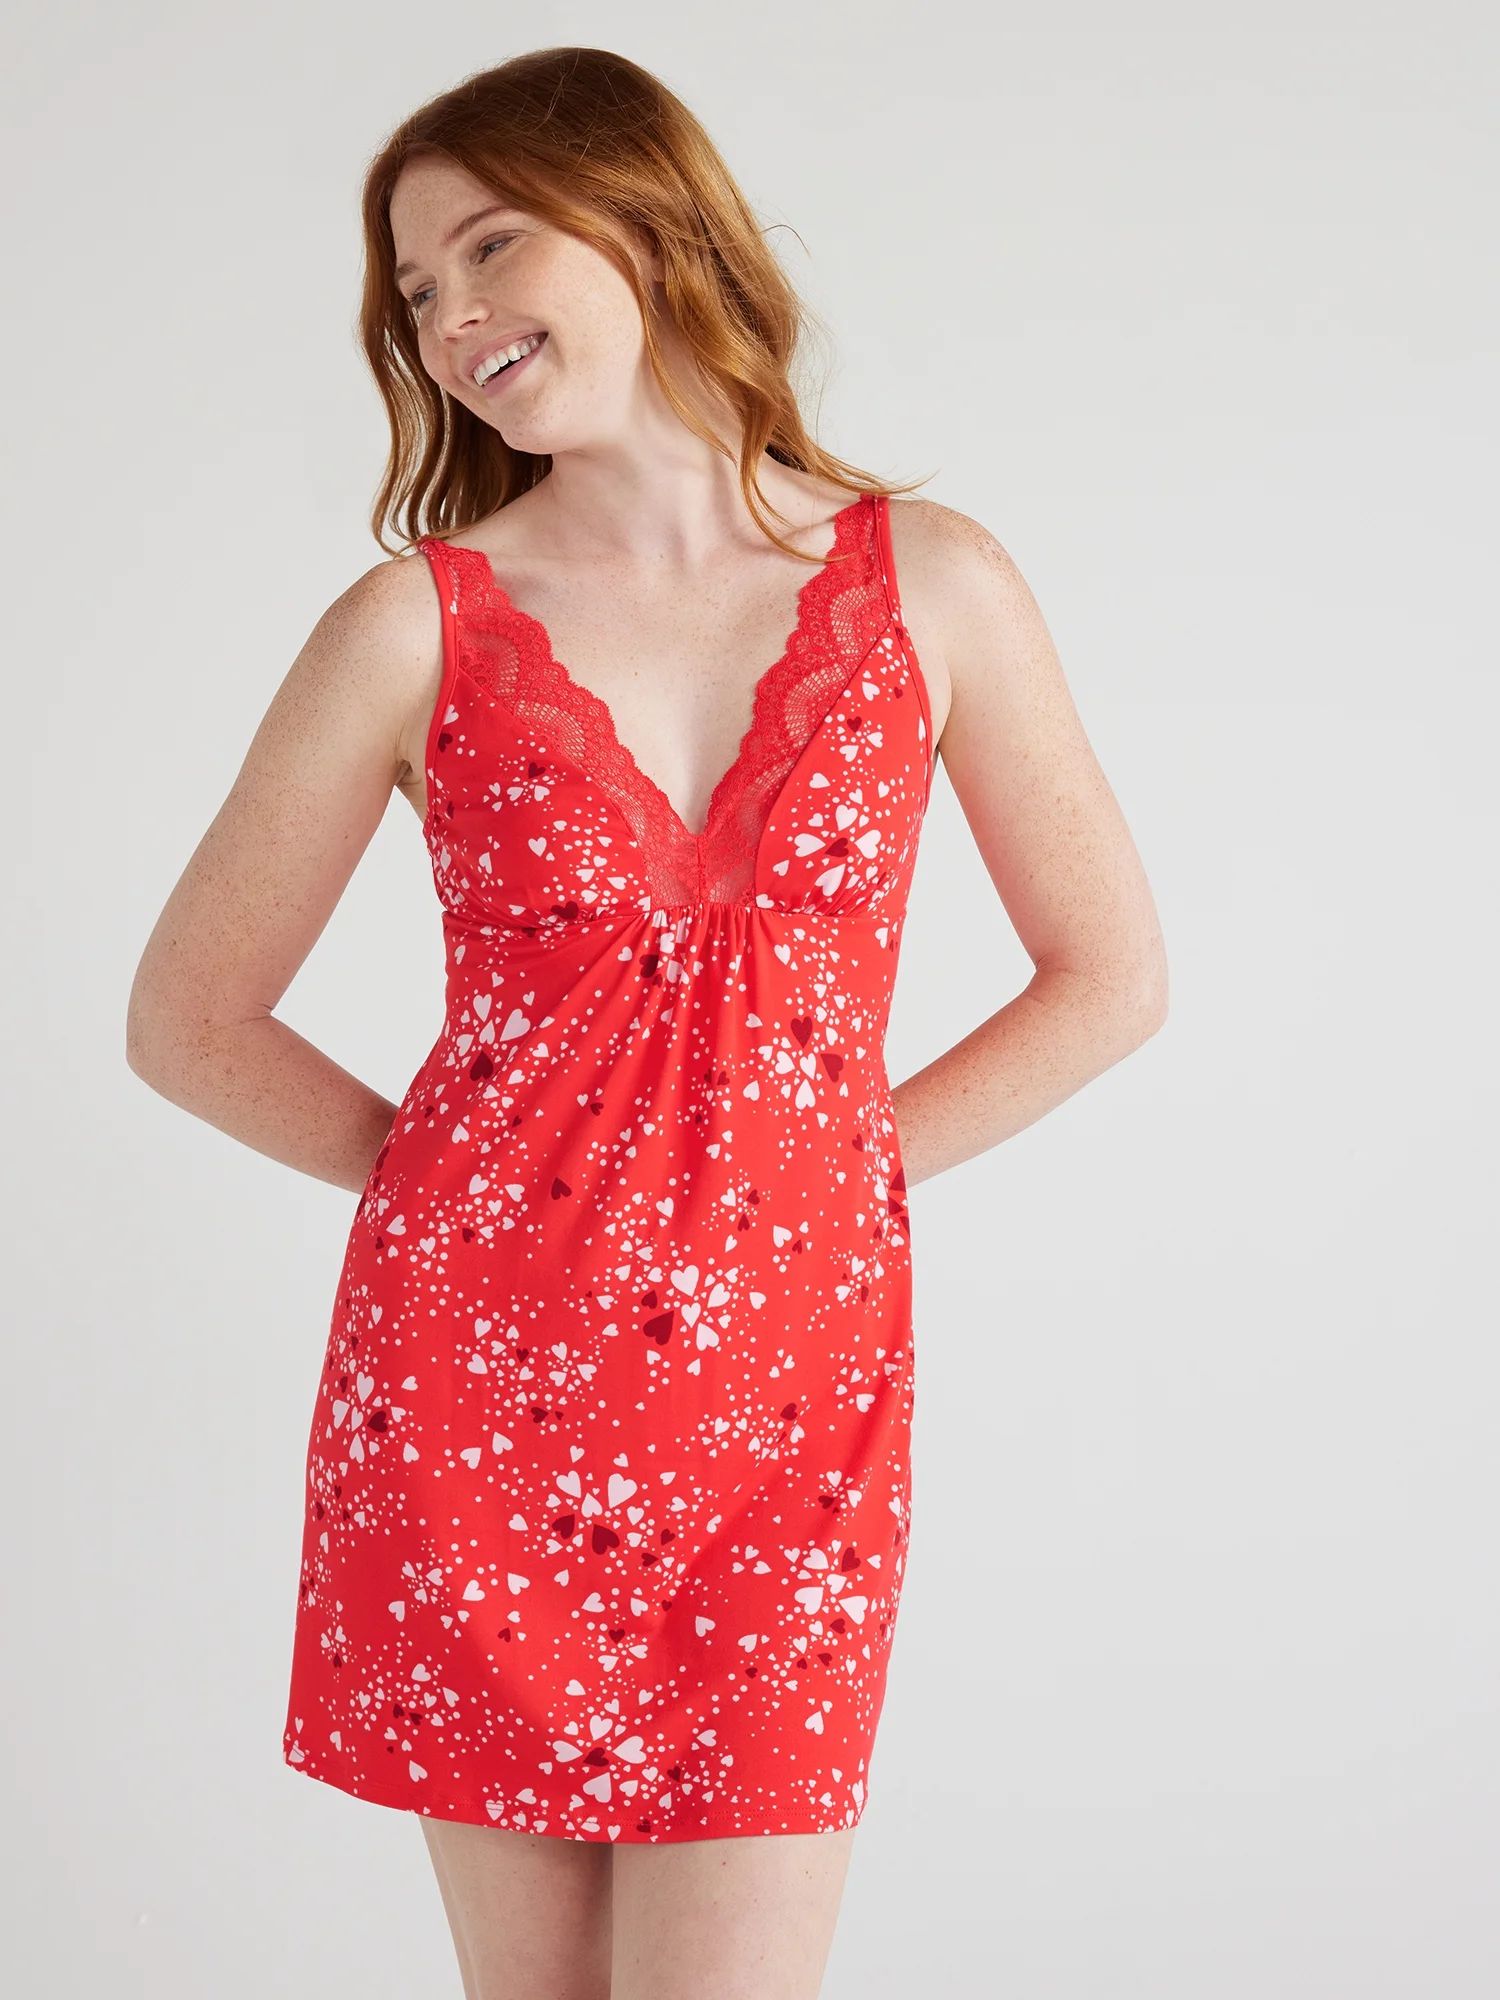 Joyspun Women’s Printed Lace Front Knit Chemise, Sizes S to 4X | Walmart (US)